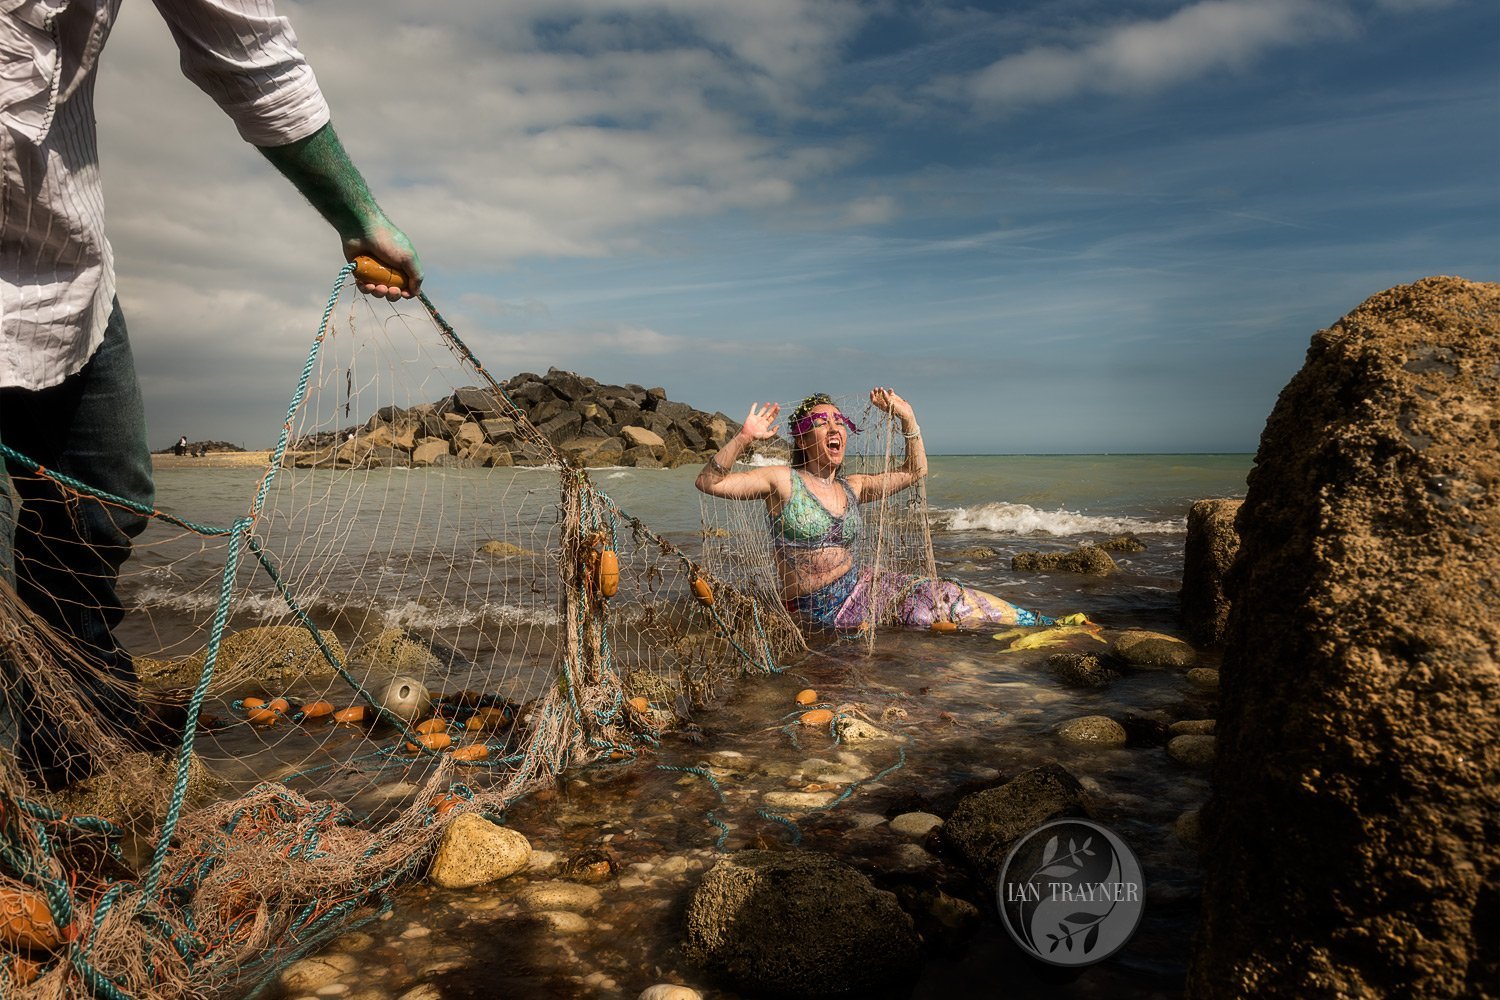 "Fisherman catches mermaid in his net" fantasy photo shoot with Ian Trayner